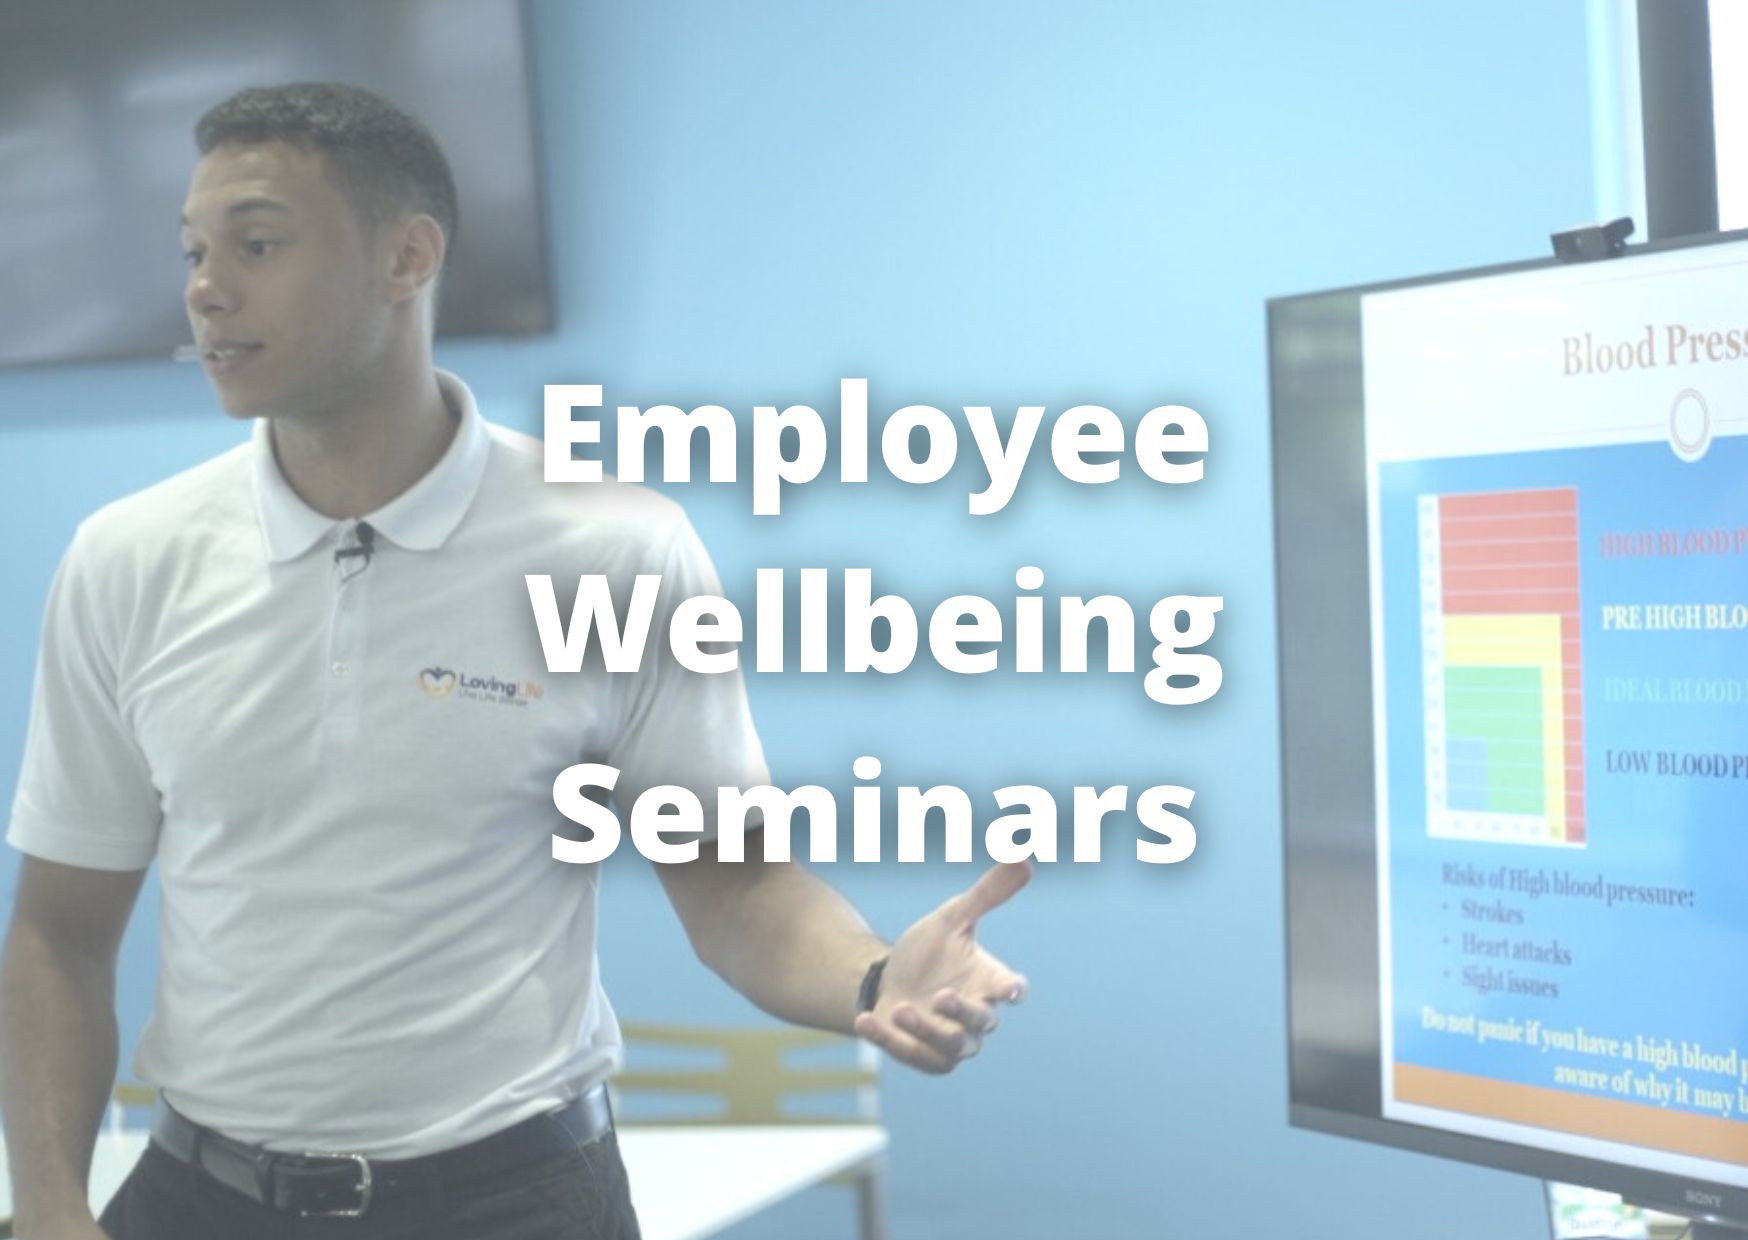 Employee wellbeing seminars